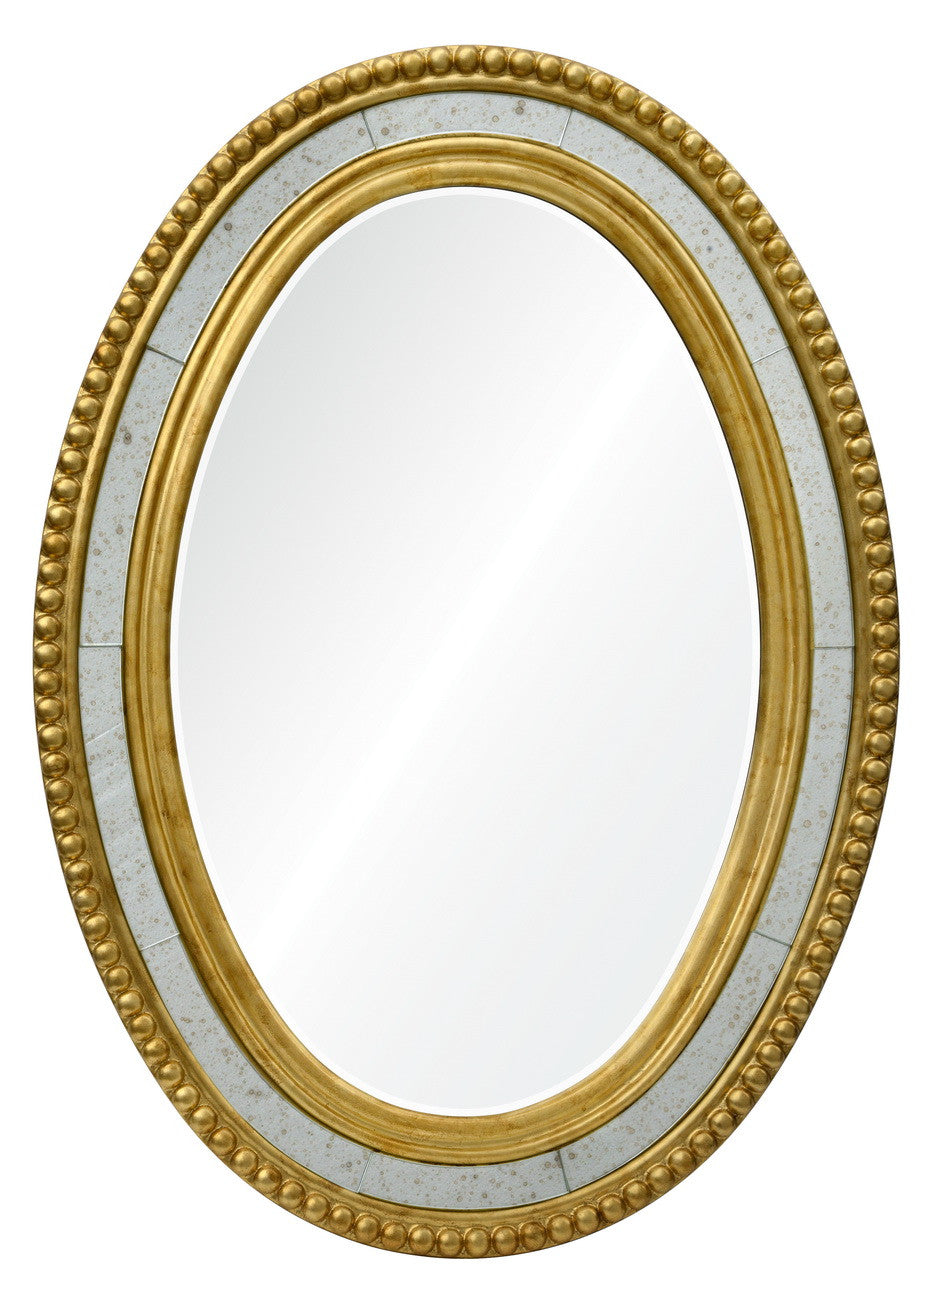 Oval framed mirror online